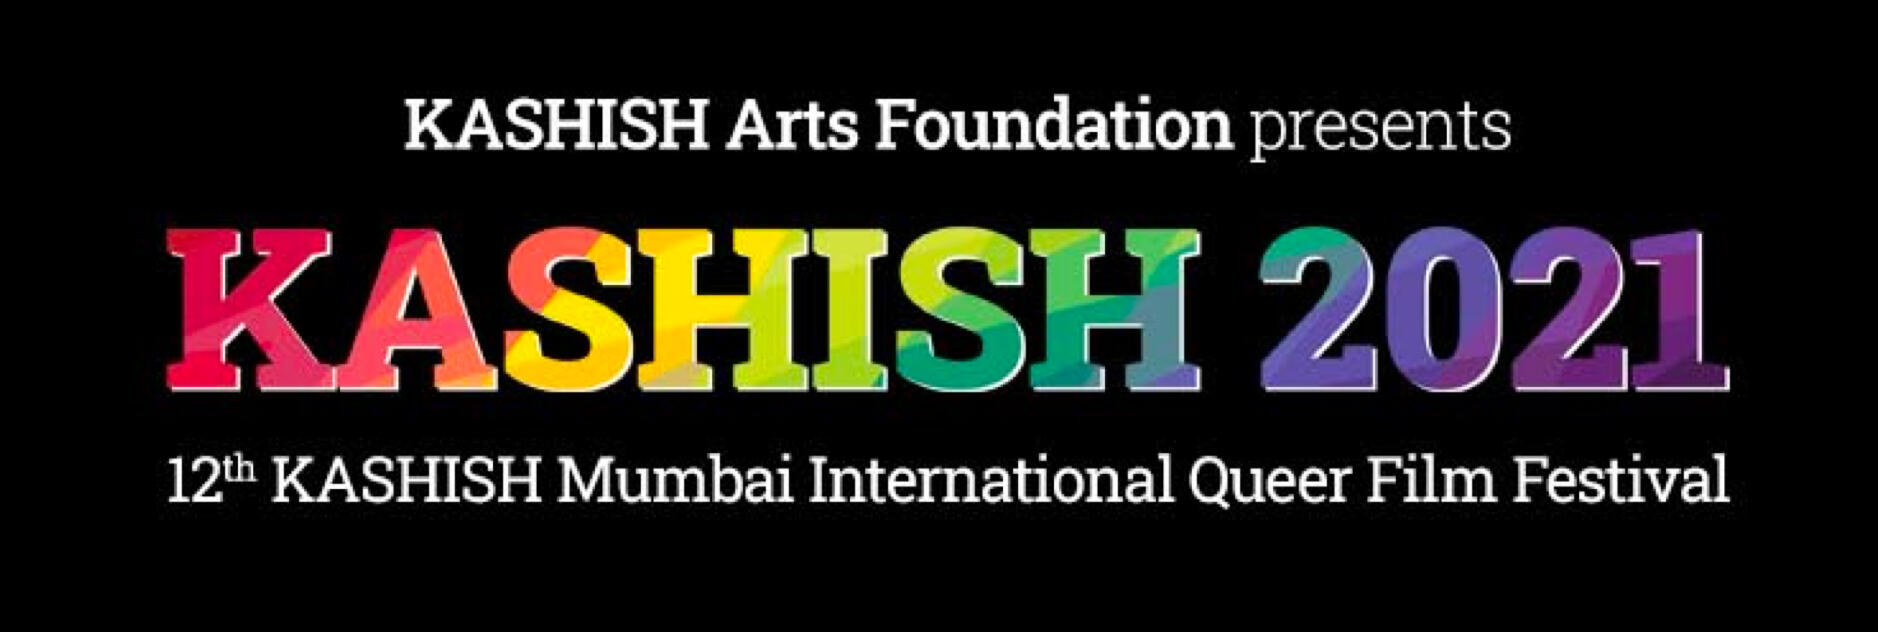 12th Kashish Mumbai International Queer Film Festival